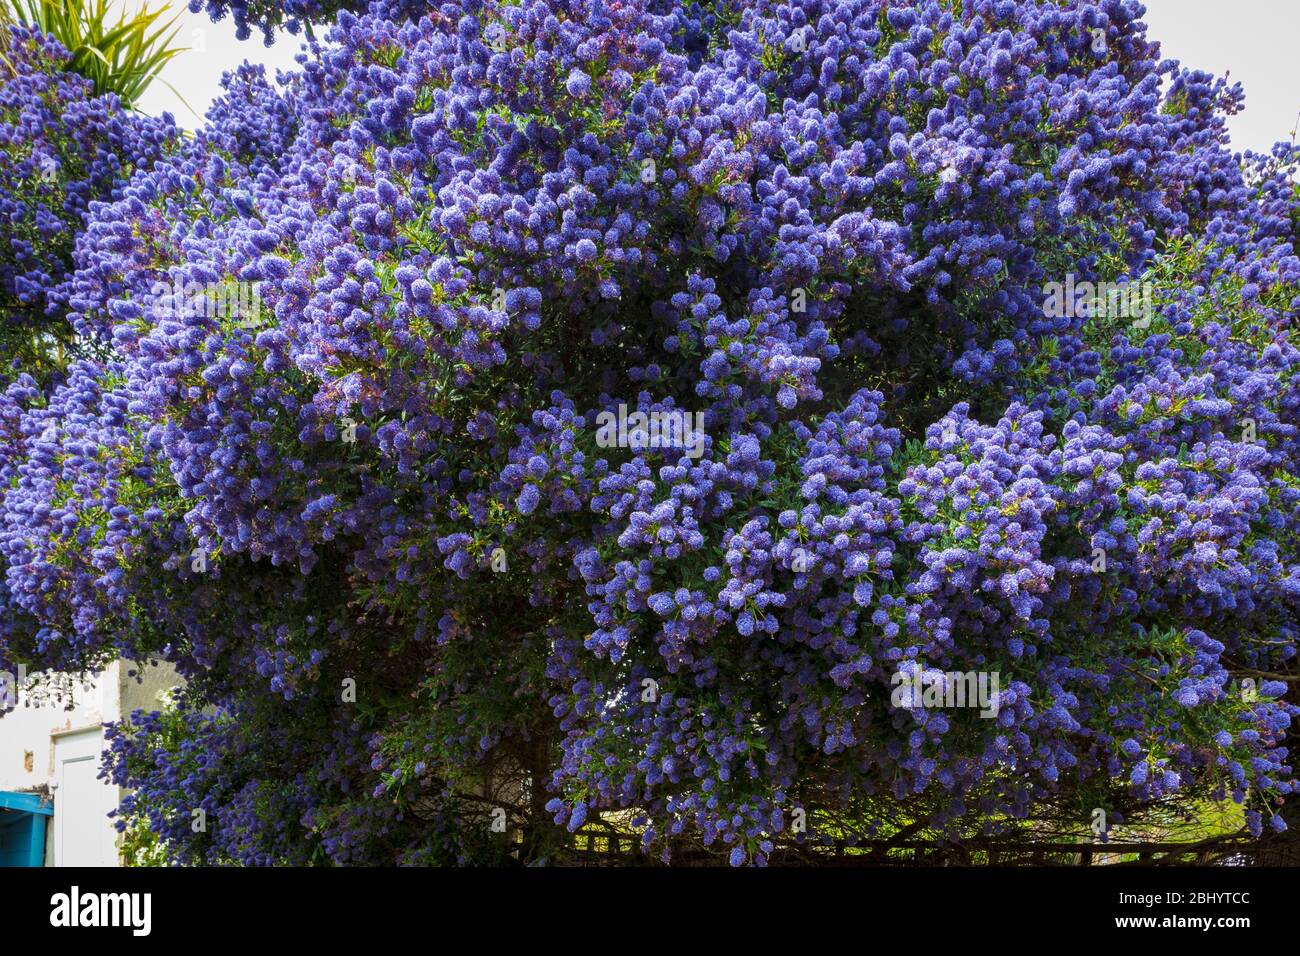 Large Ceanothus Bush in Full Bloom in Domestic Garden in UK During Spring Stock Photo